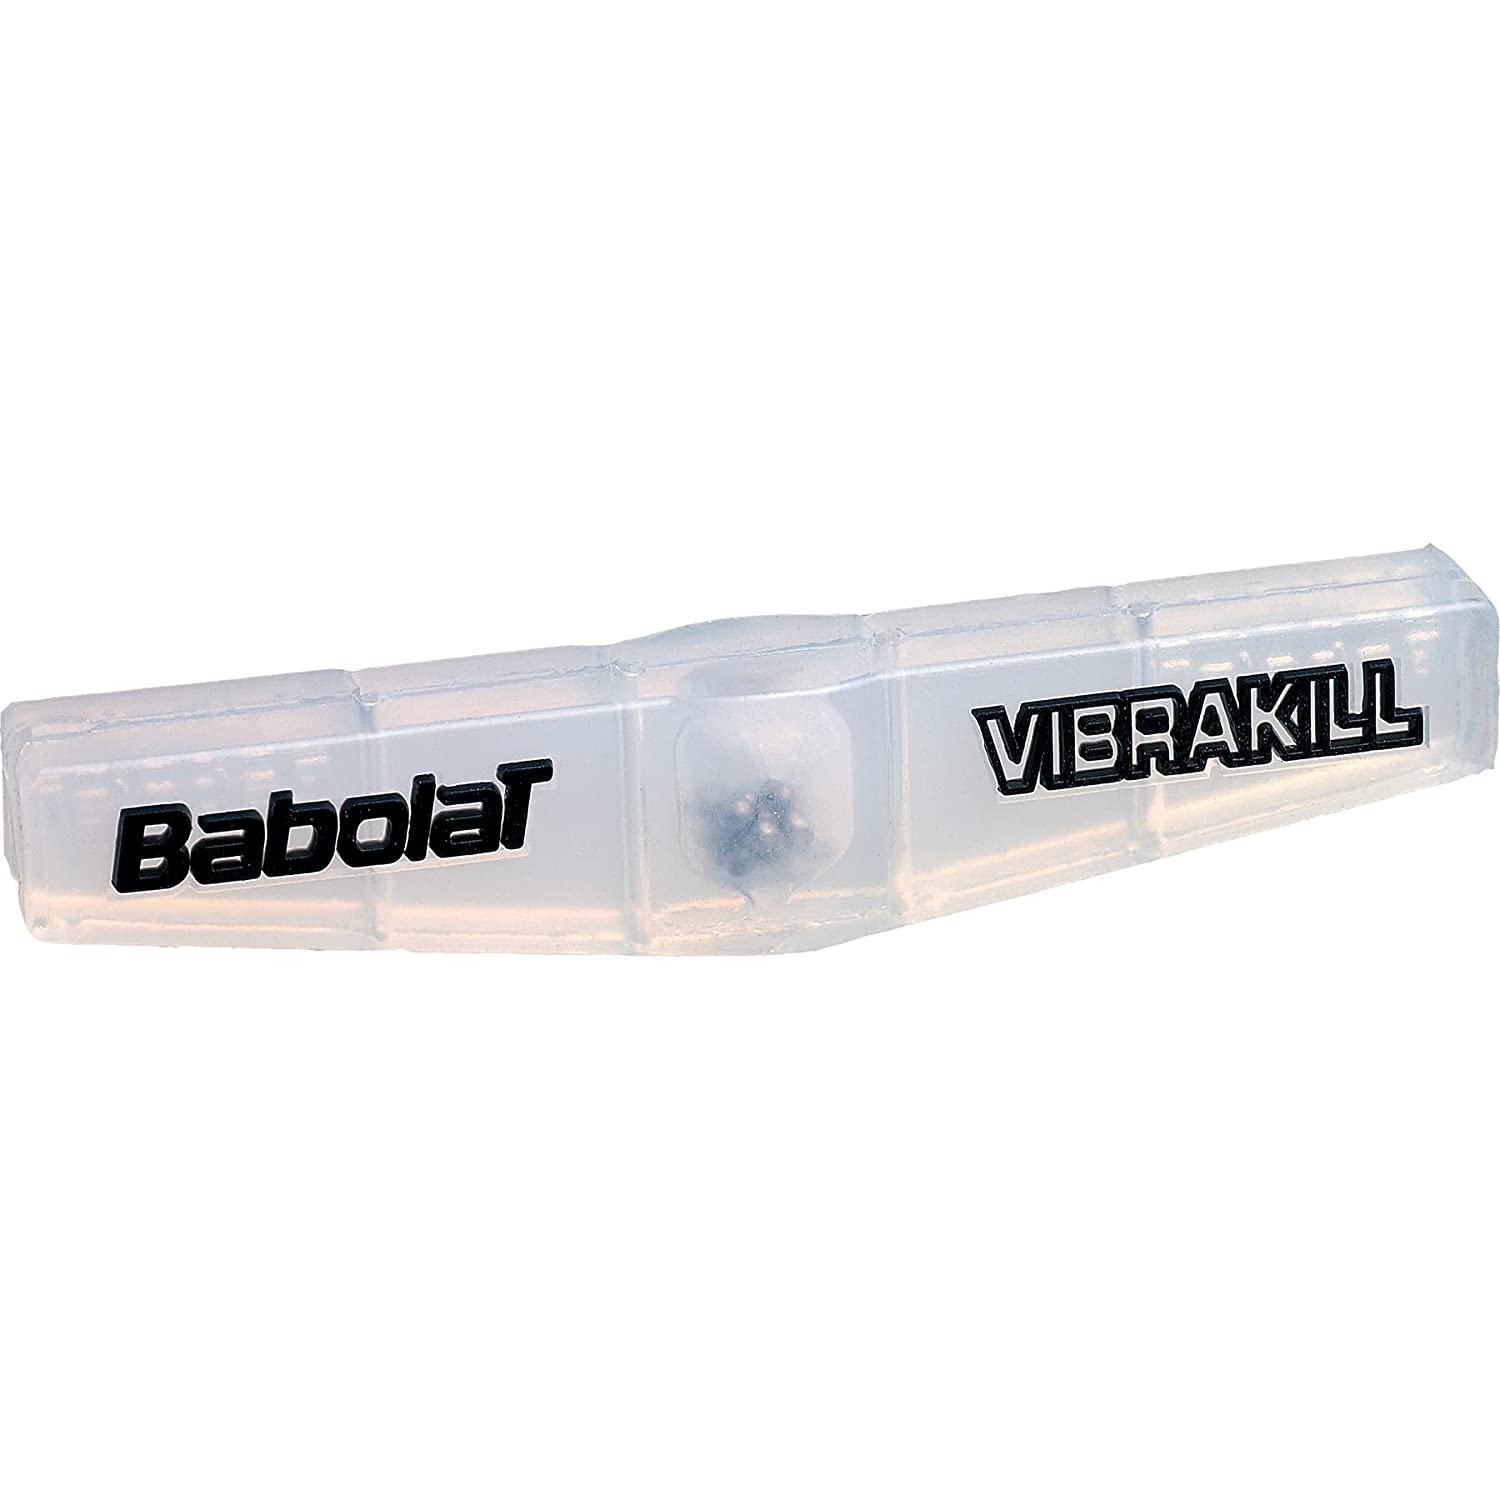 Babolat VIBRAKILL Vibration Absorber, Clear - Best Price online Prokicksports.com